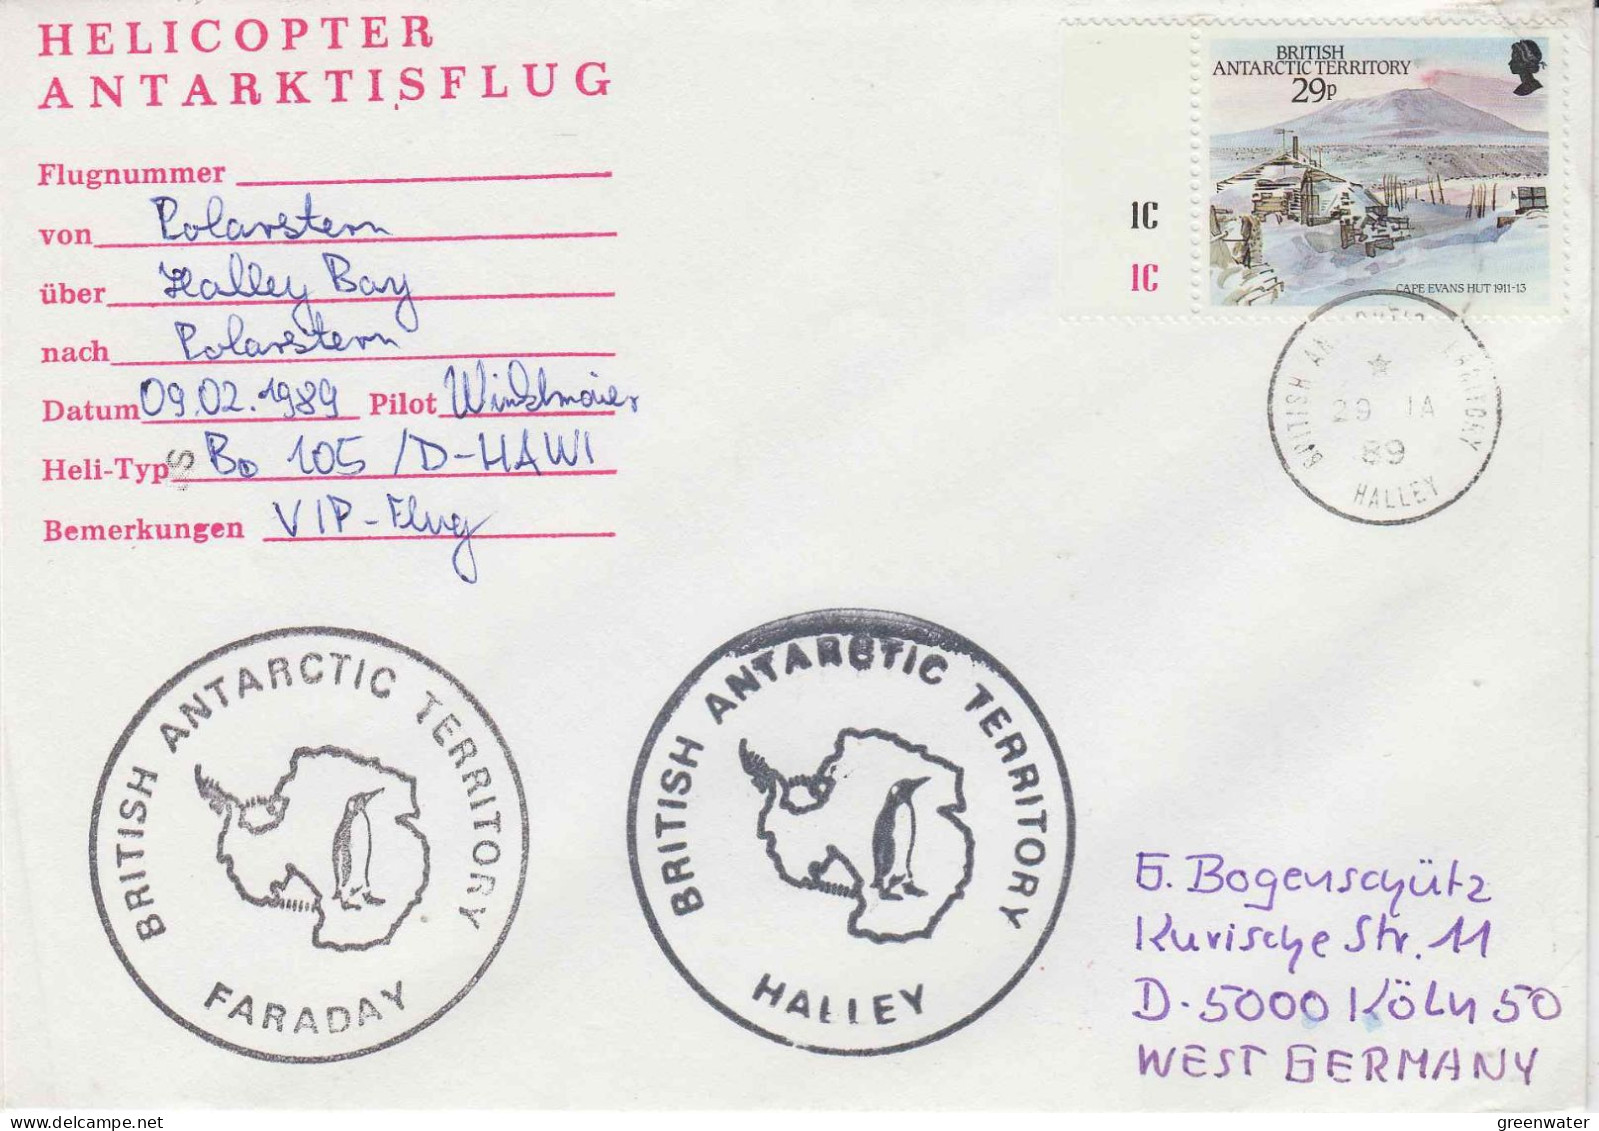 British Antarctic Territory (BAT) Polarstern Antarctic Flight From Polarstern To Halley 09.02.1989 (PT155A) - Polar Flights